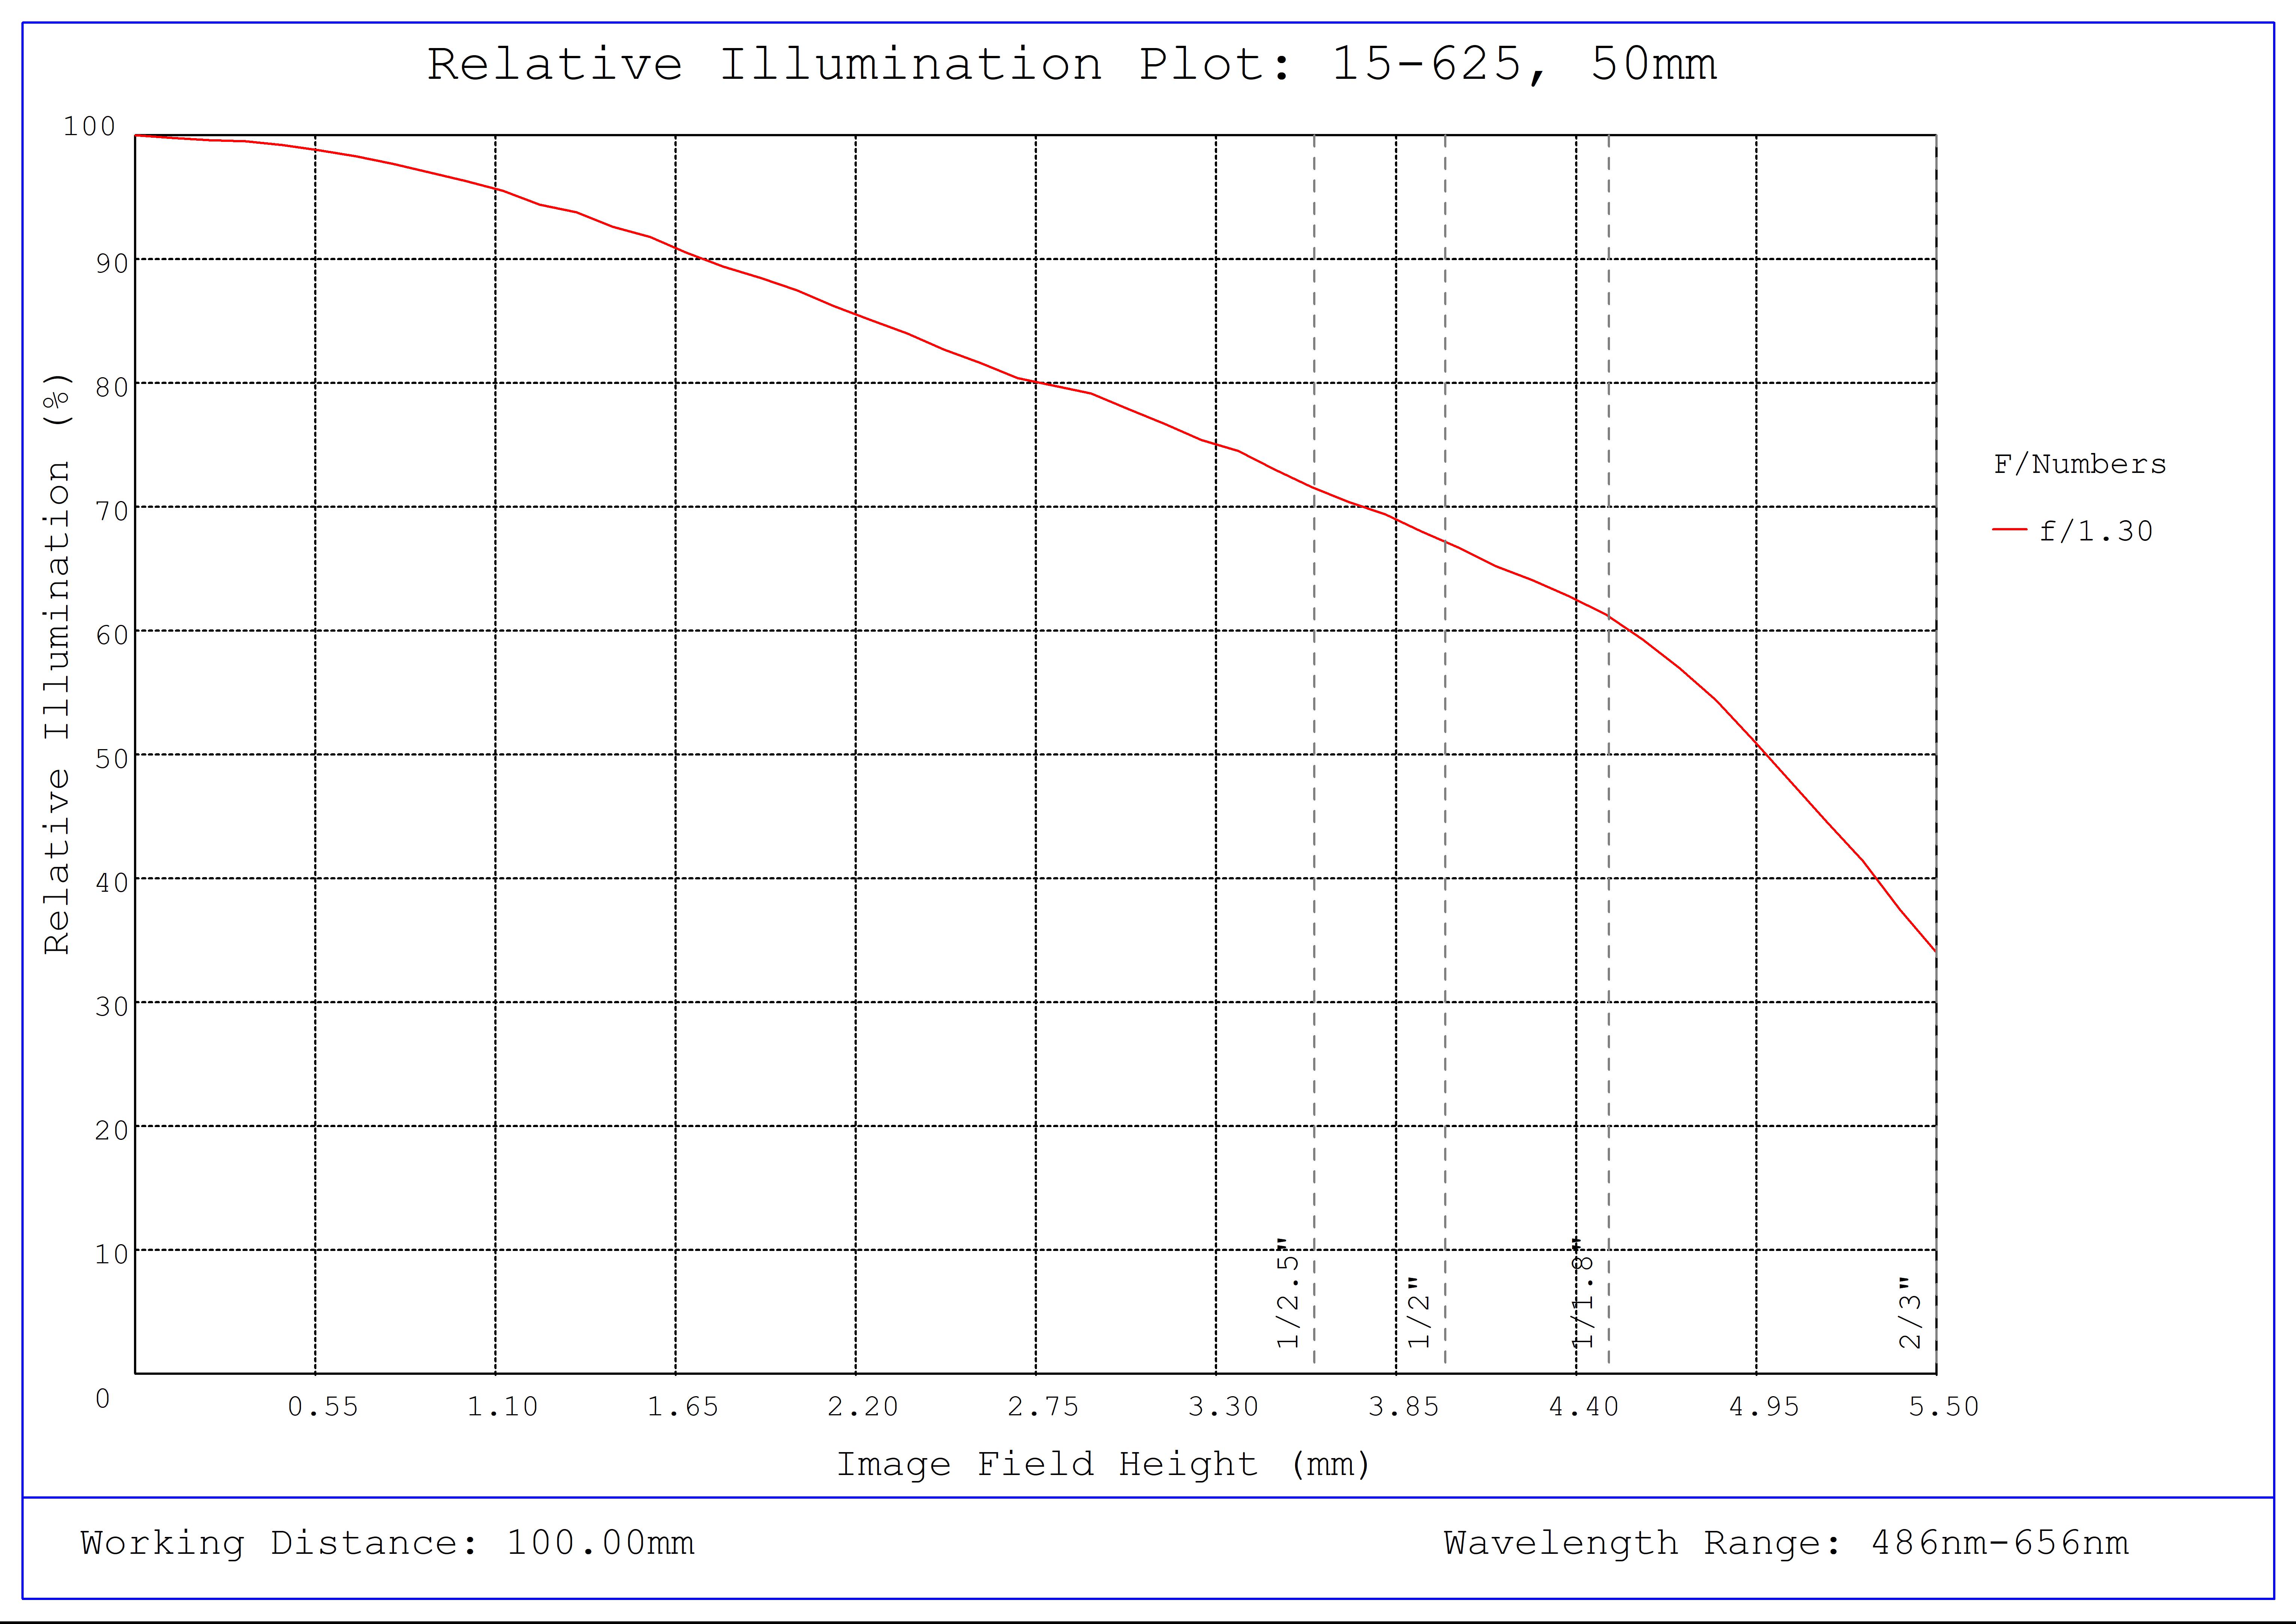 #15-625, 8.5mm, f/1.3 Cw Series Fixed Focal Length Lens, Relative Illumination Plot